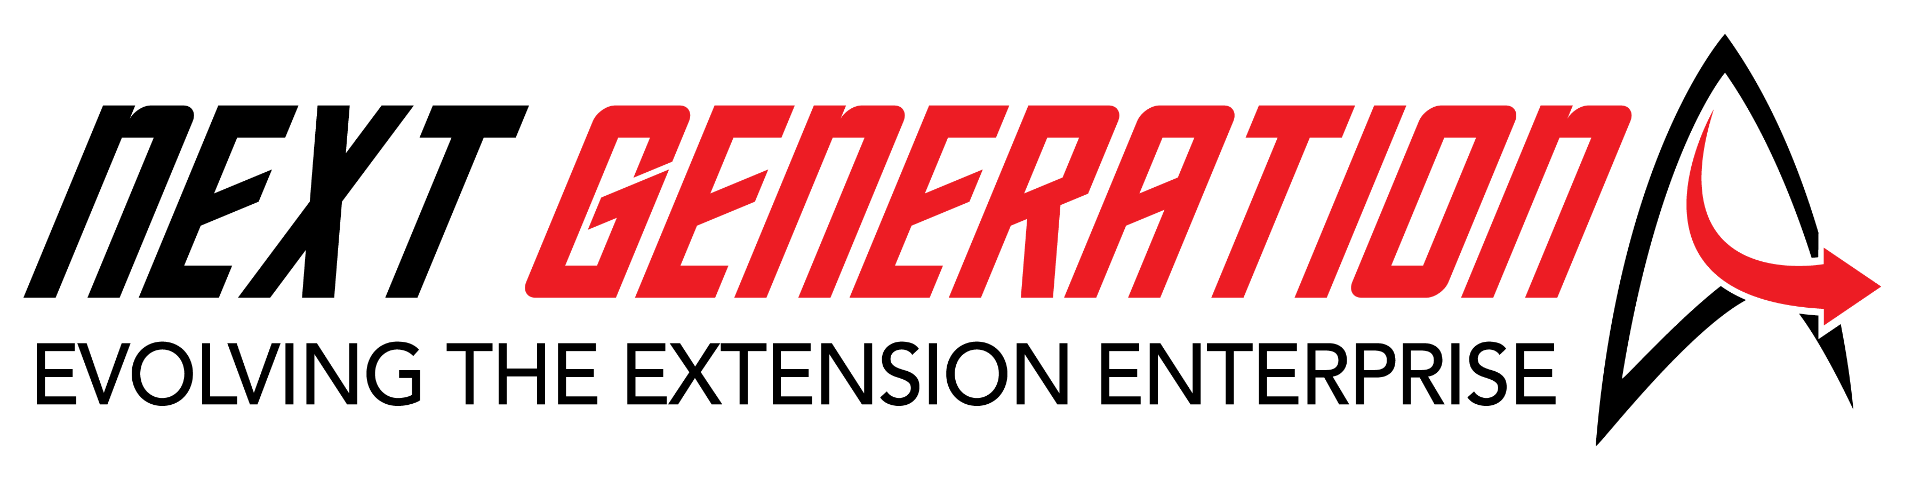 Next Generation: Evolving the Extension Enterprise logo.